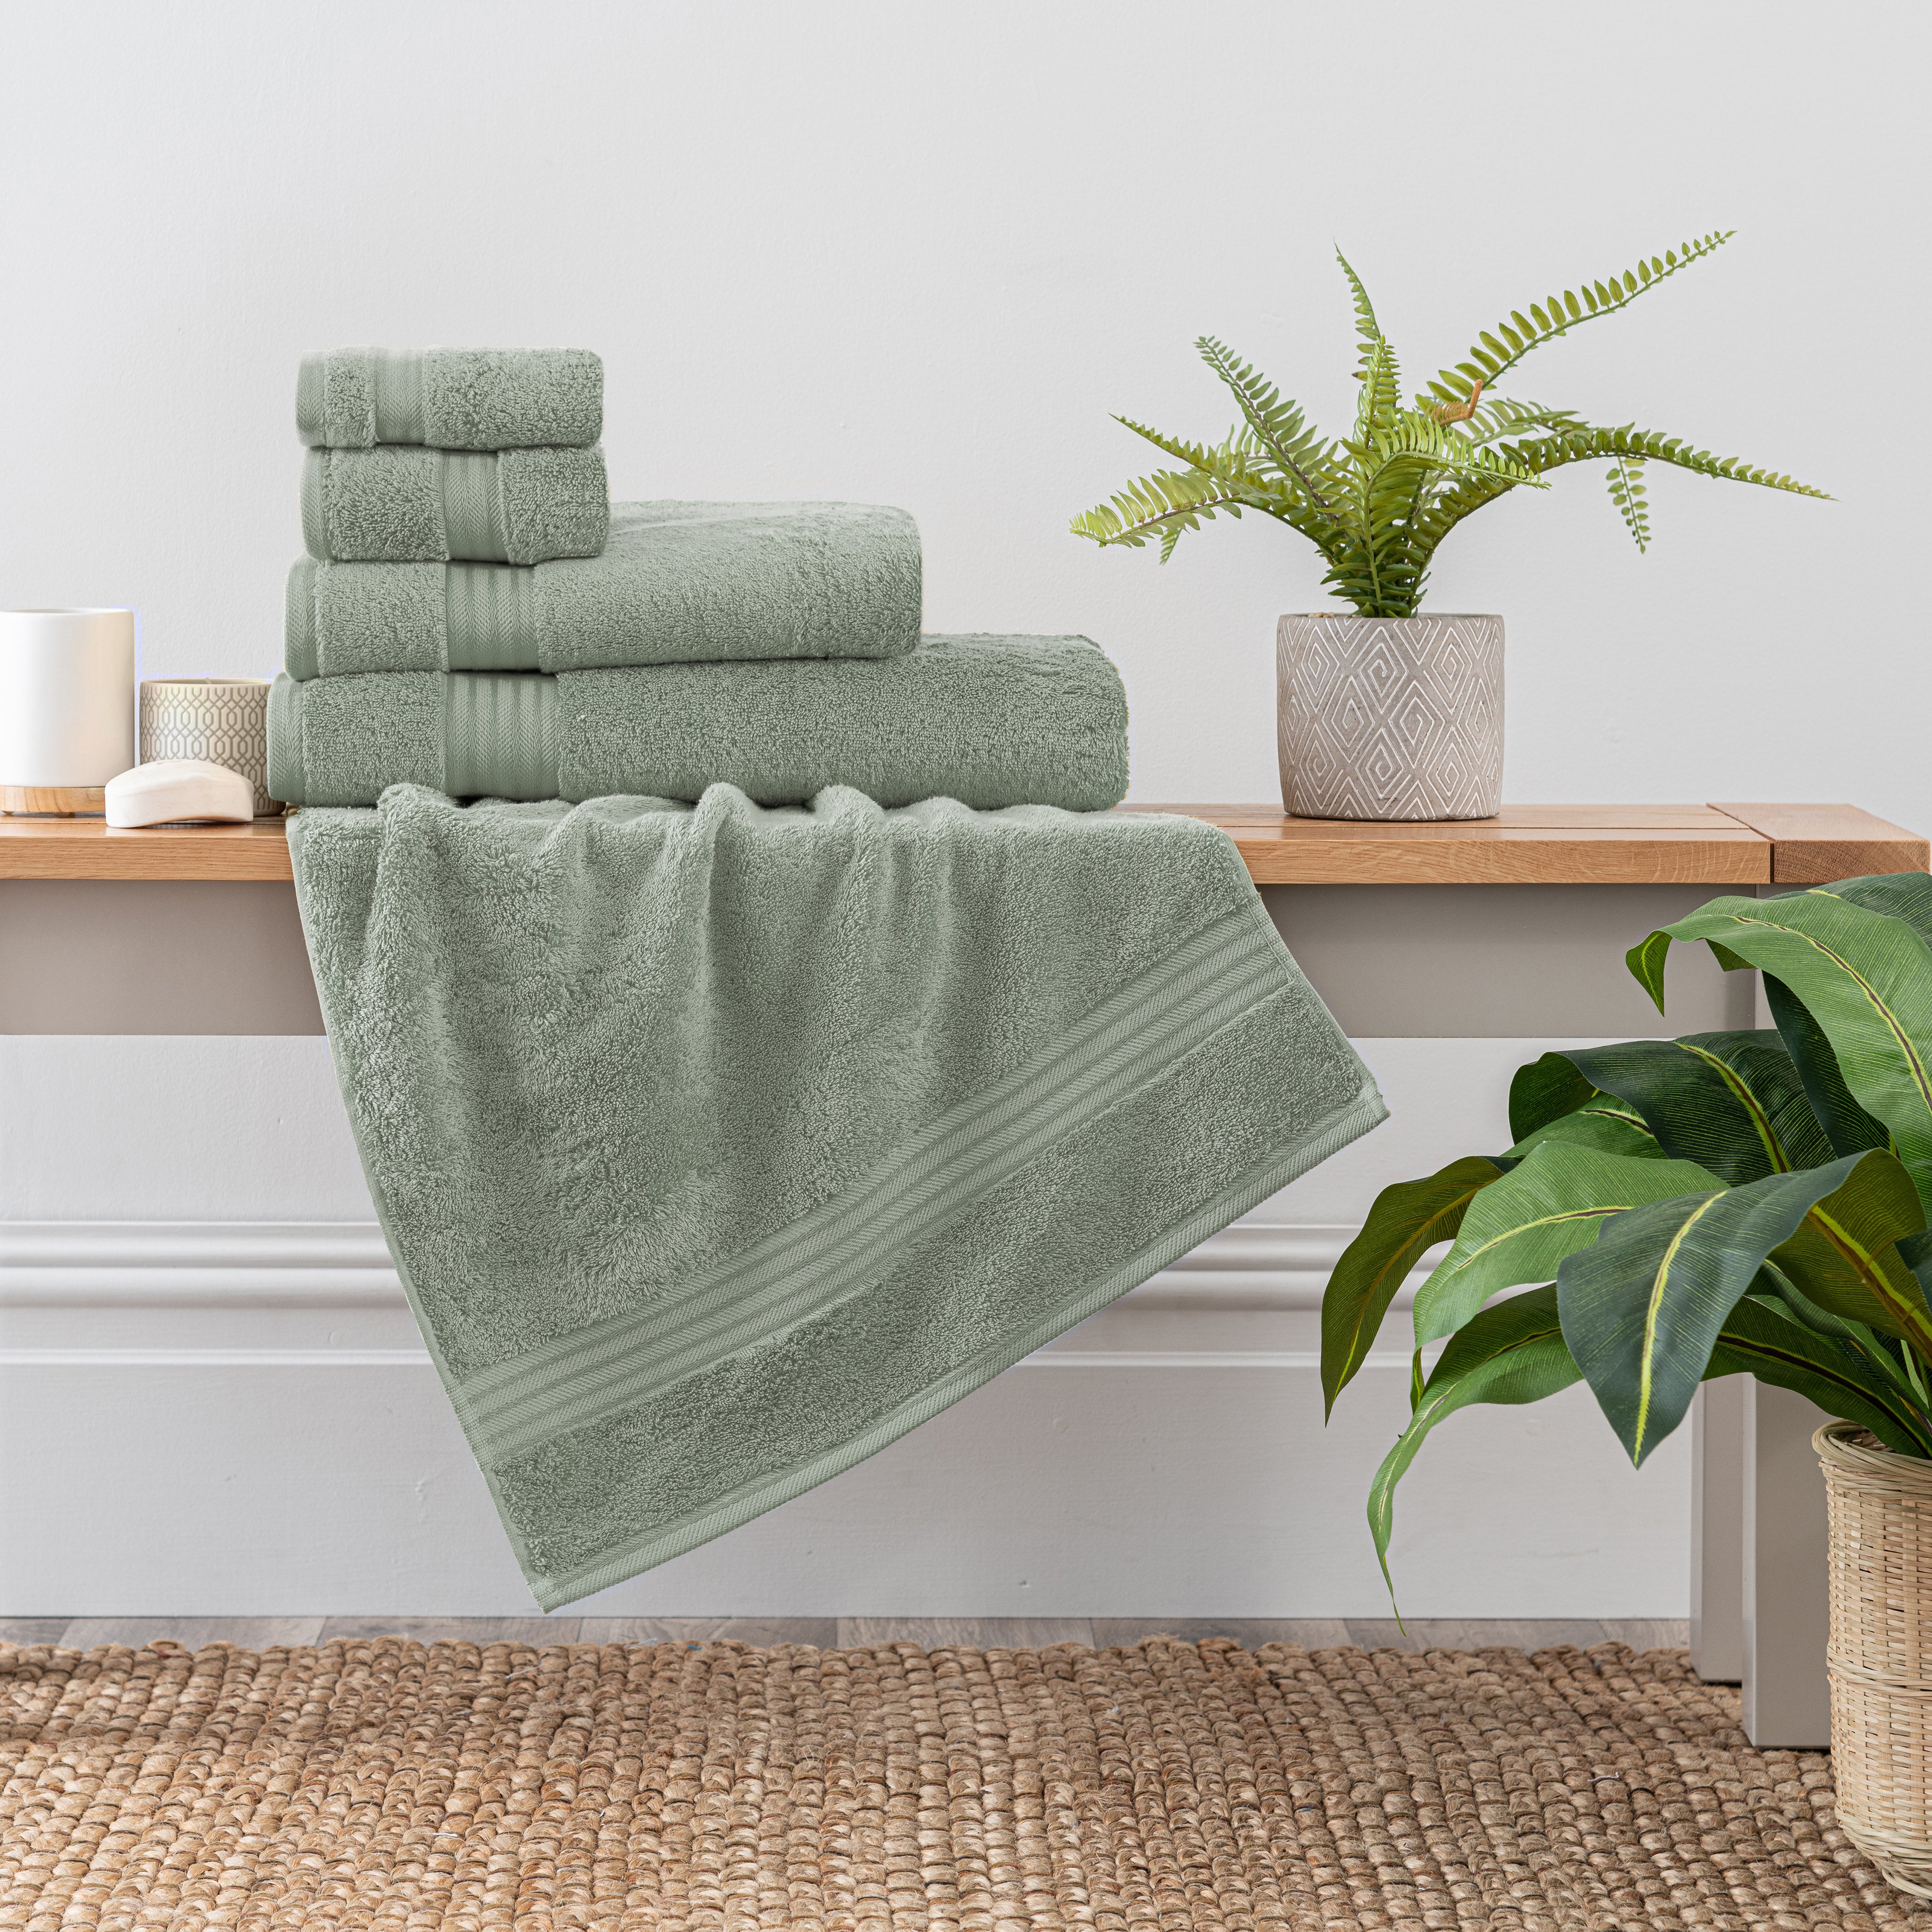 Home Decorators Collection Egyptian Cotton Sage Green Bath Sheet